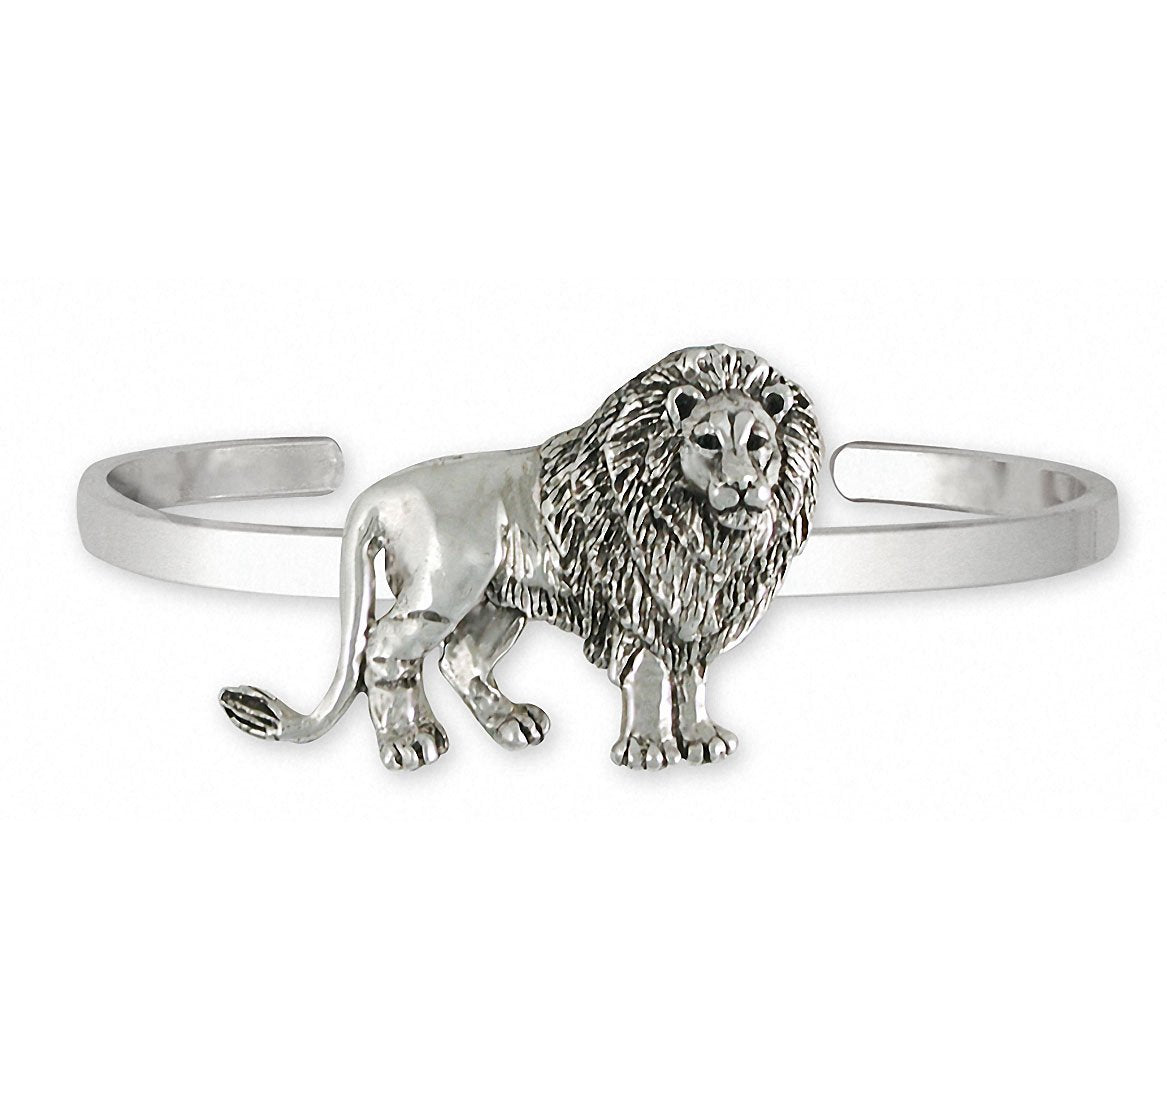 Going On Safari European Charm Bracelet With Elephant, Lion, Giraffe Charm  Beads | eBay